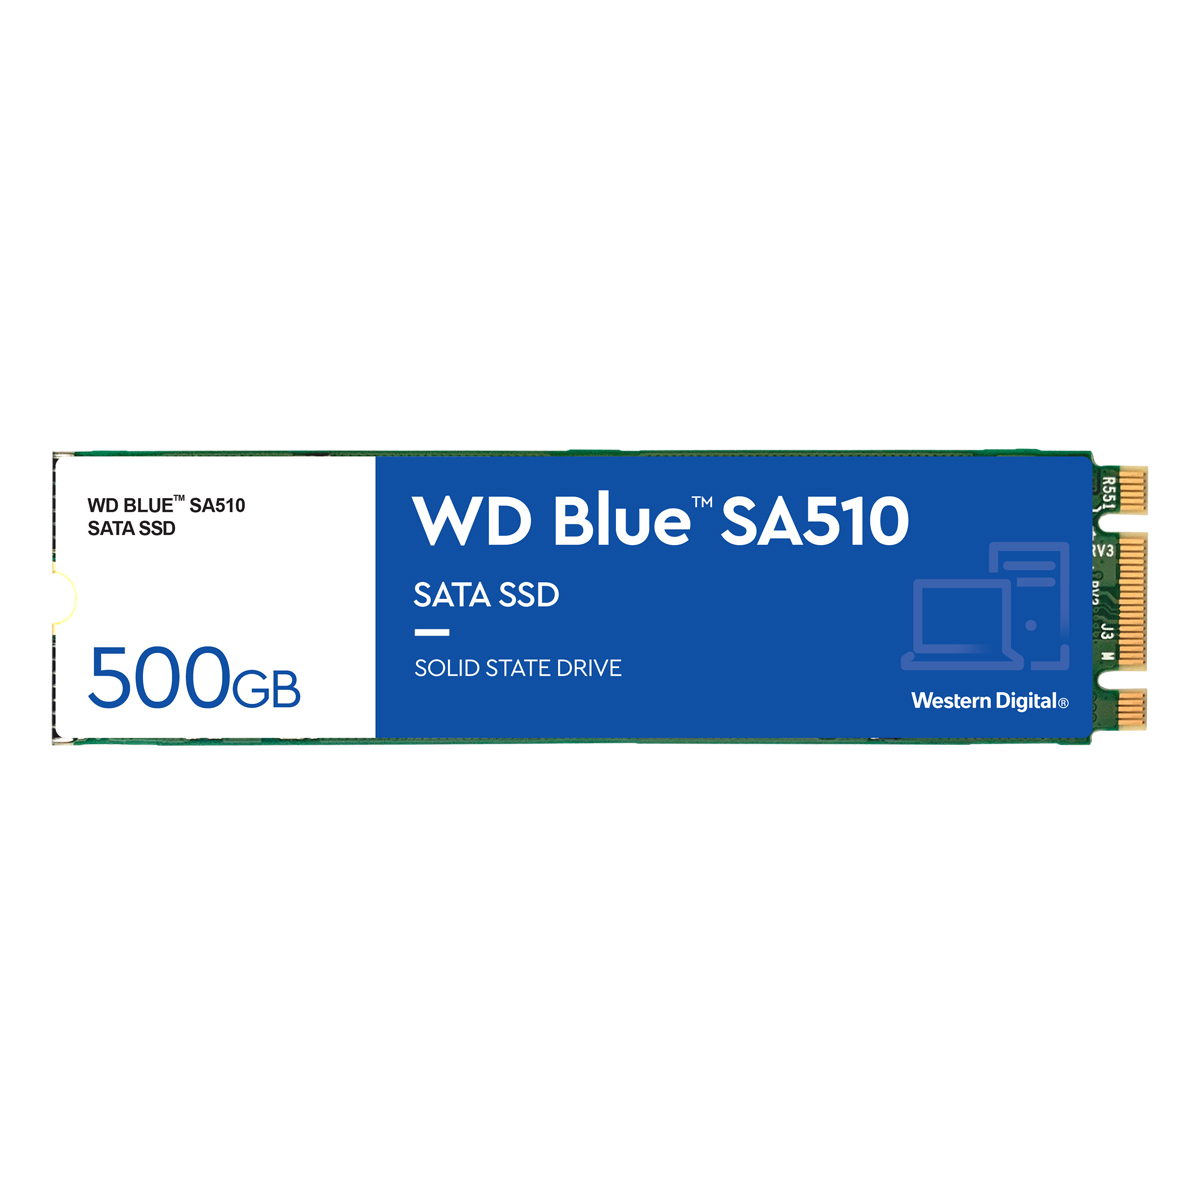 WD Blue SA510 SSD 500GB M.2 2280 SATA 6 Gbit/s - interne Solid-State-Drive von WD